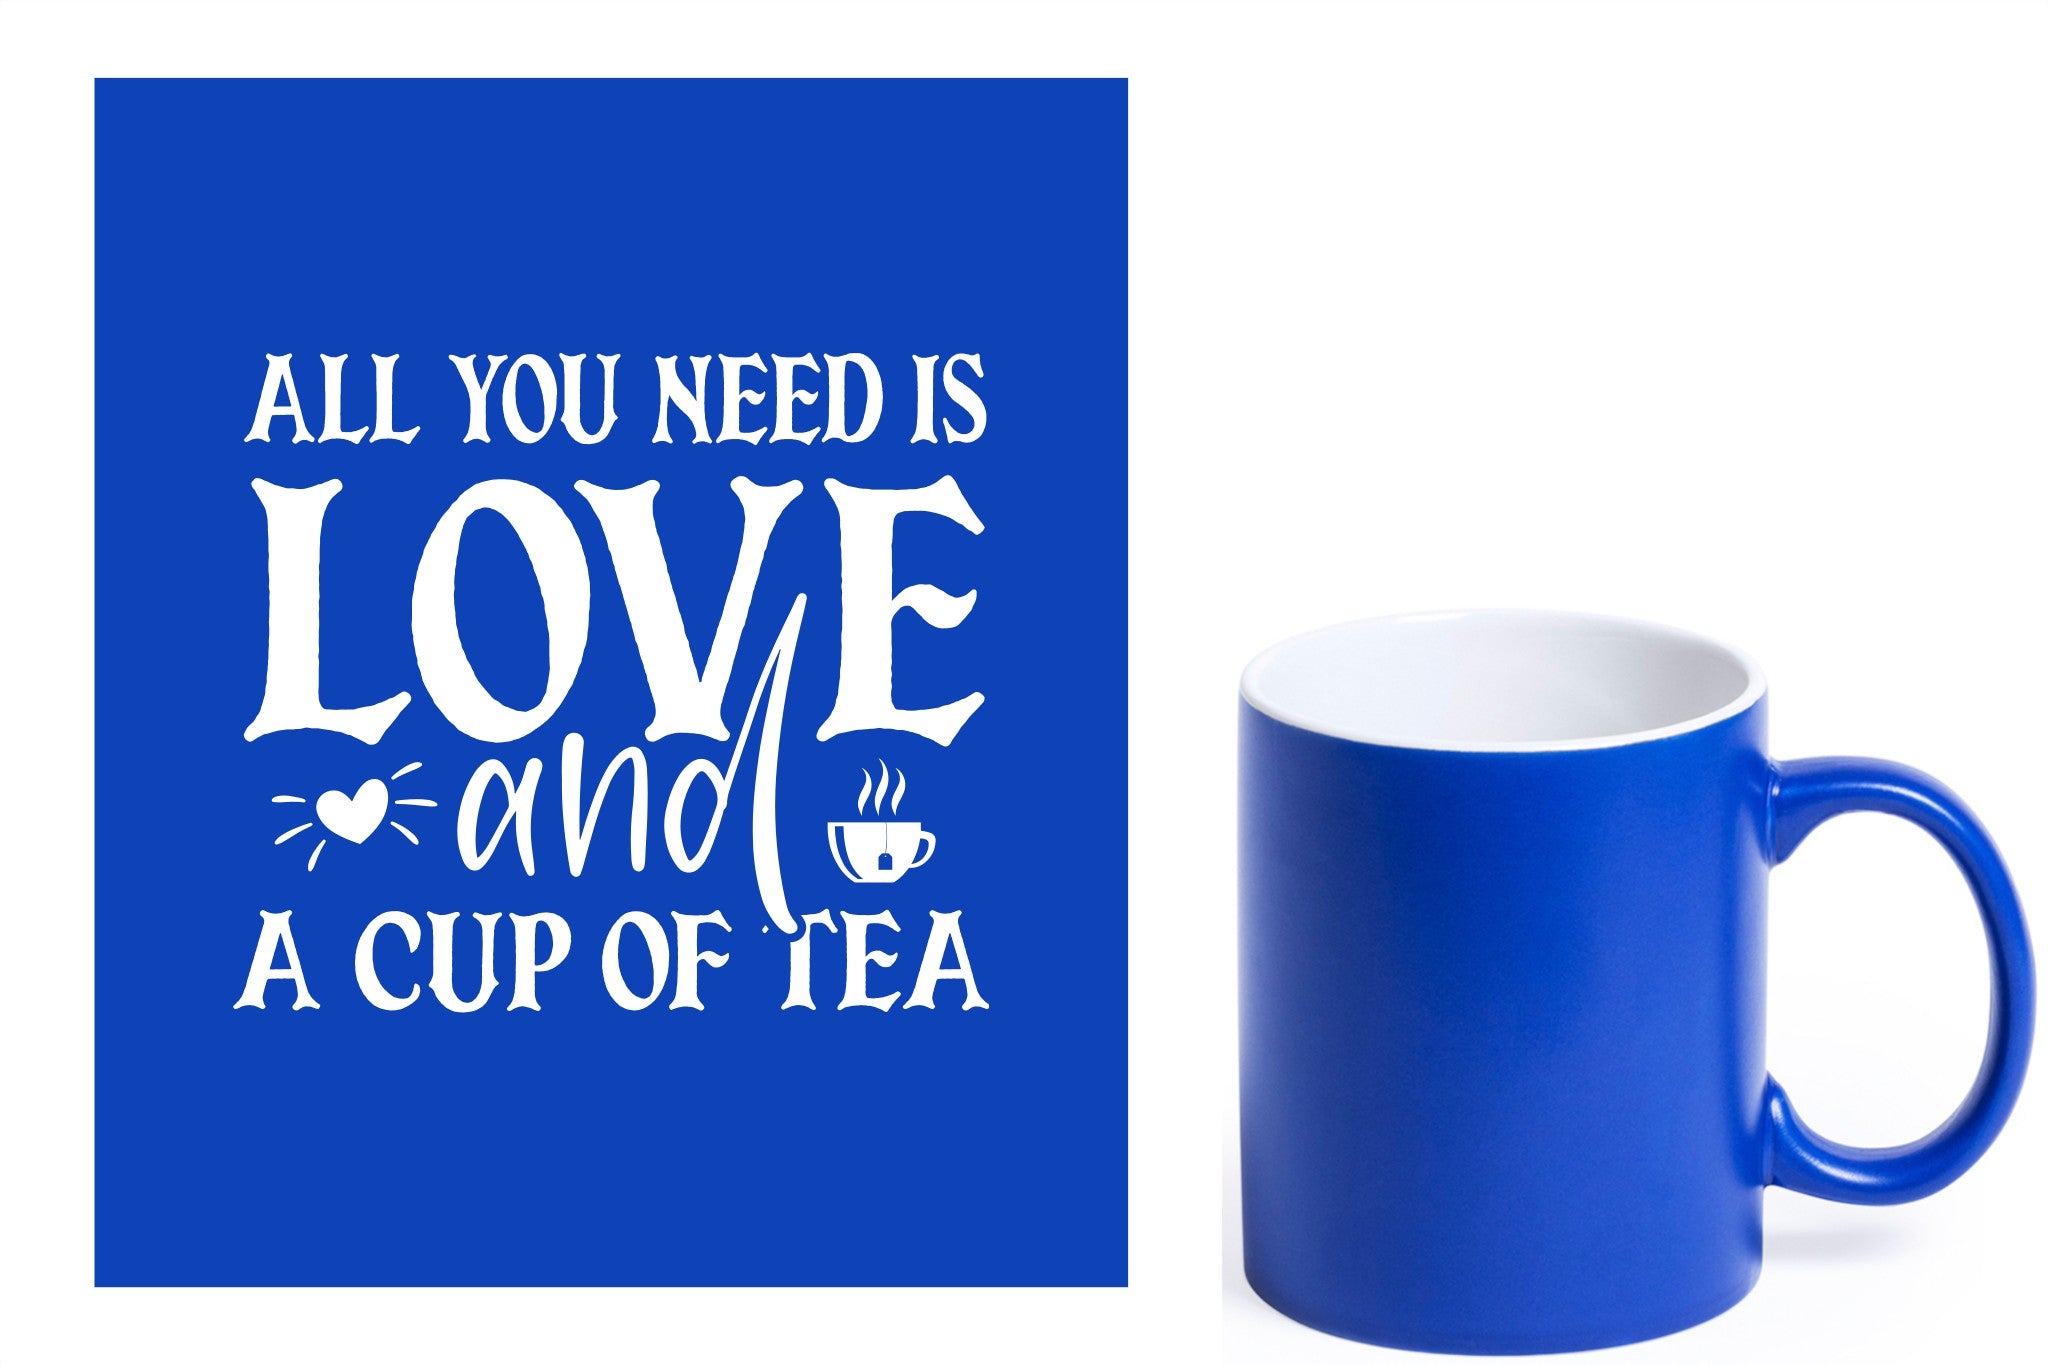 Blauwe keramische mok met witte gravure  'All you need is love and a cup of tea'.